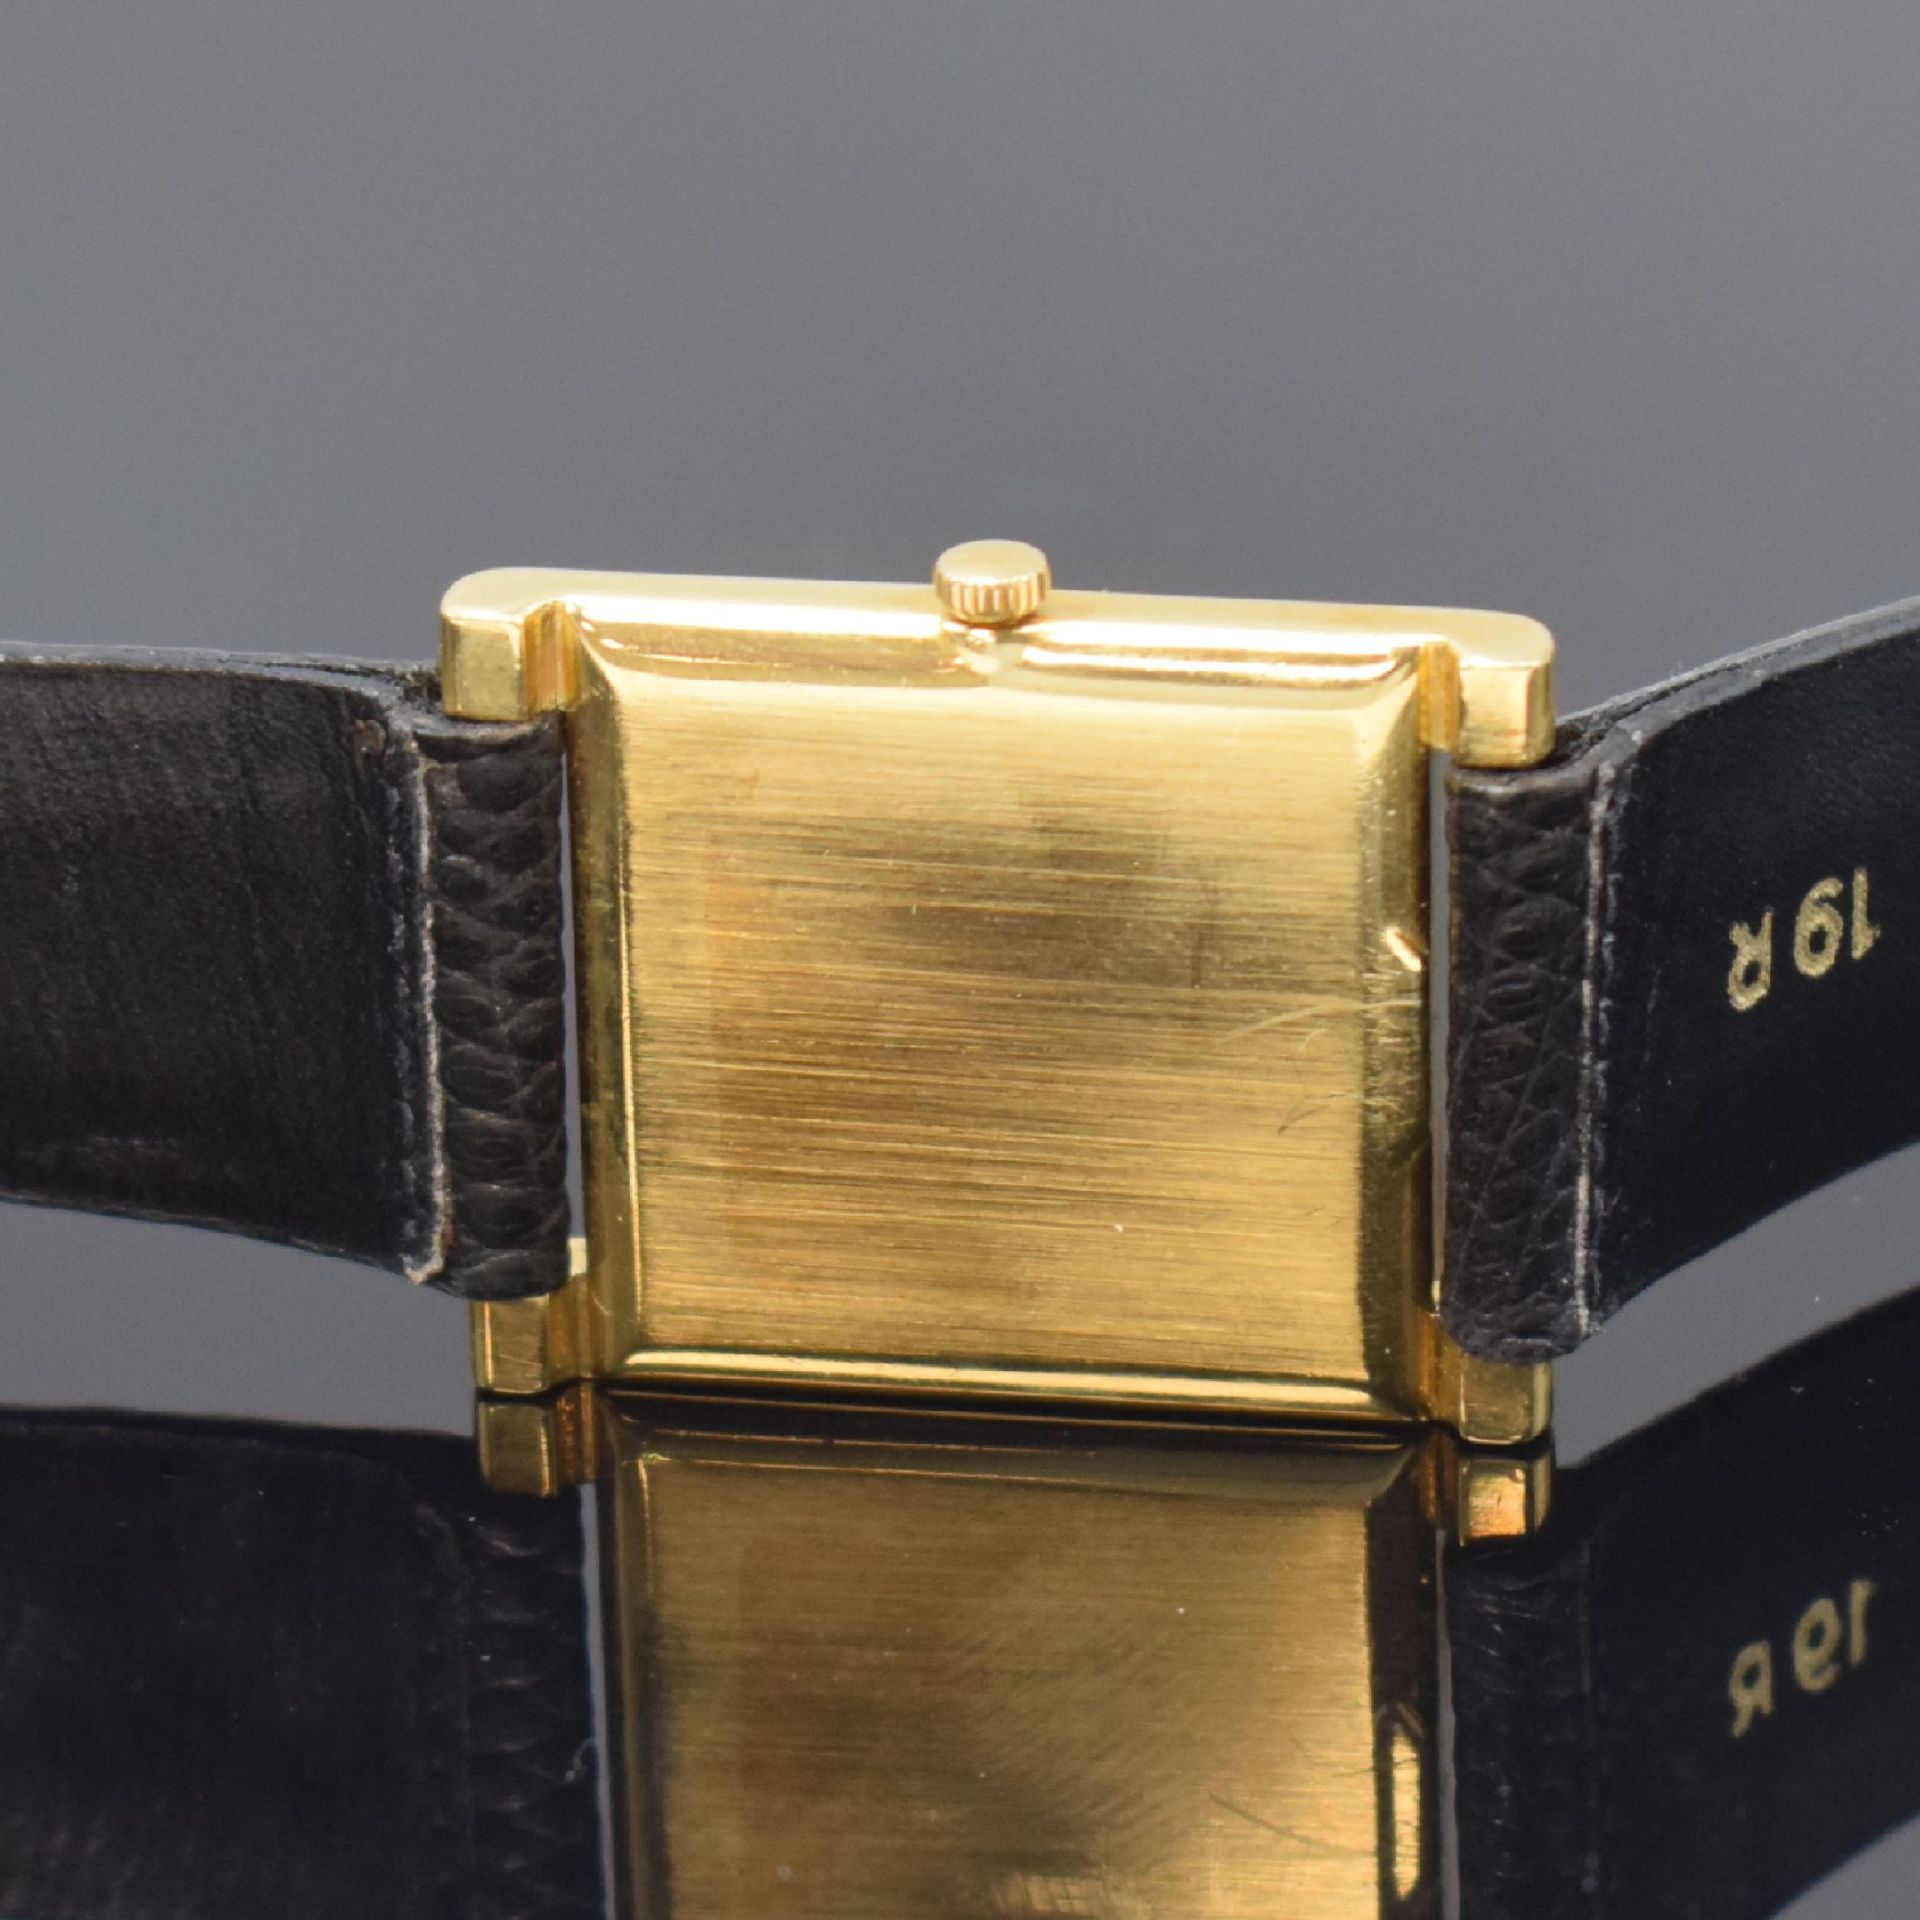 OMEGA rechteckige Armbanduhr Referenz 3981 in GG 750/000, - Bild 4 aus 6